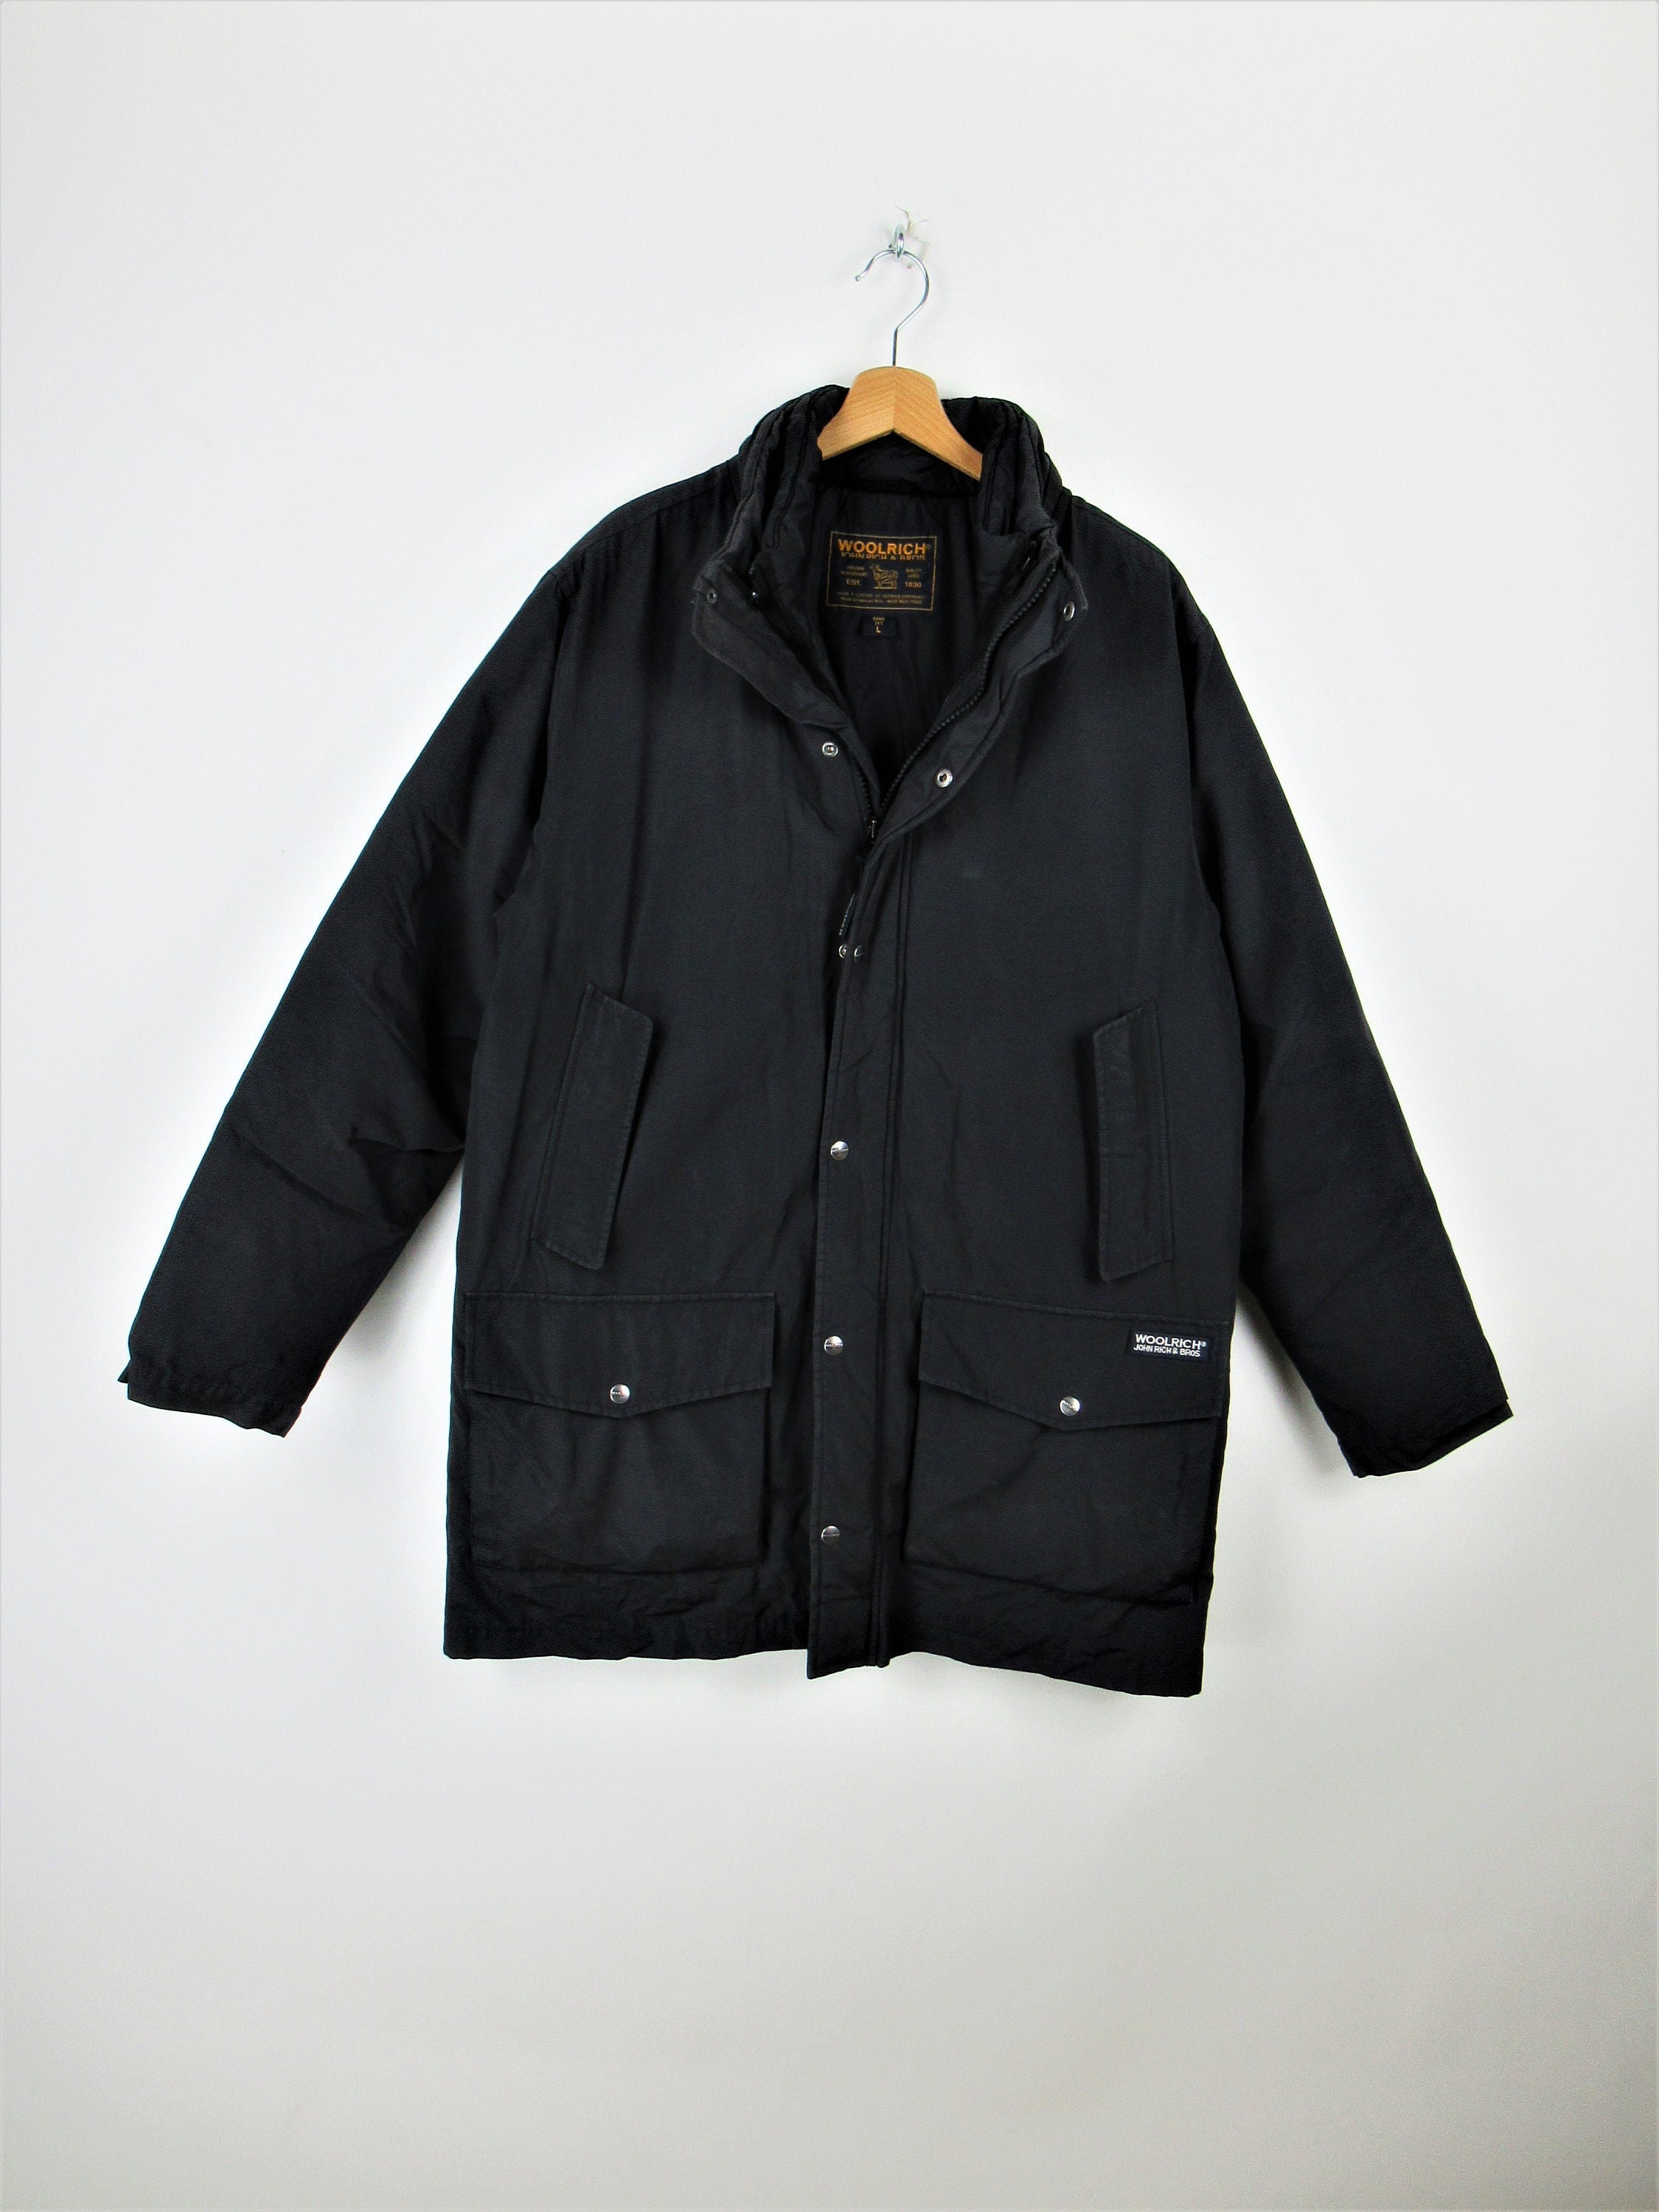 WOOLRICH WJOU0071 Gray Gore-Tex Infinium Down Jacket coat USA/S/EU/M gray